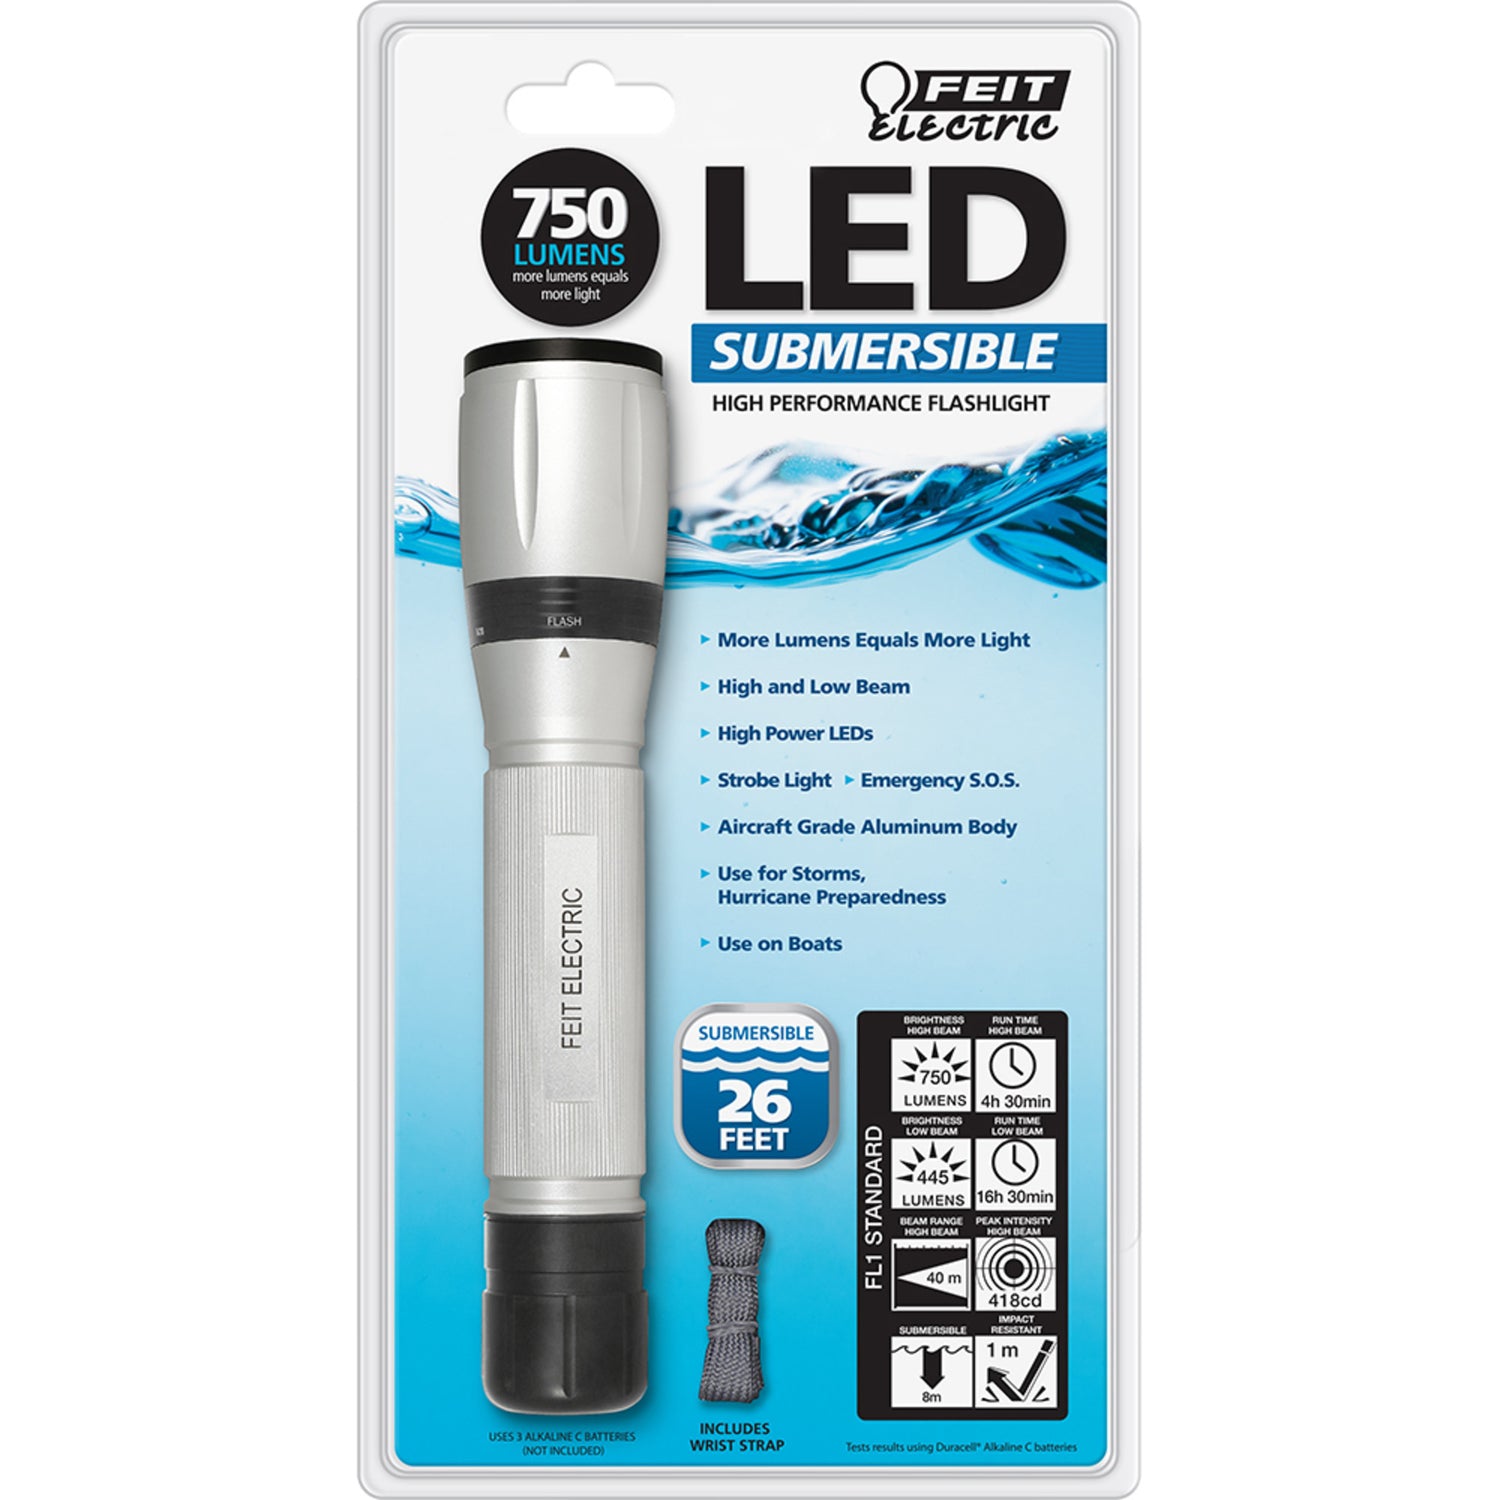 750 Lumen LED Submersible High Performance Flashlight